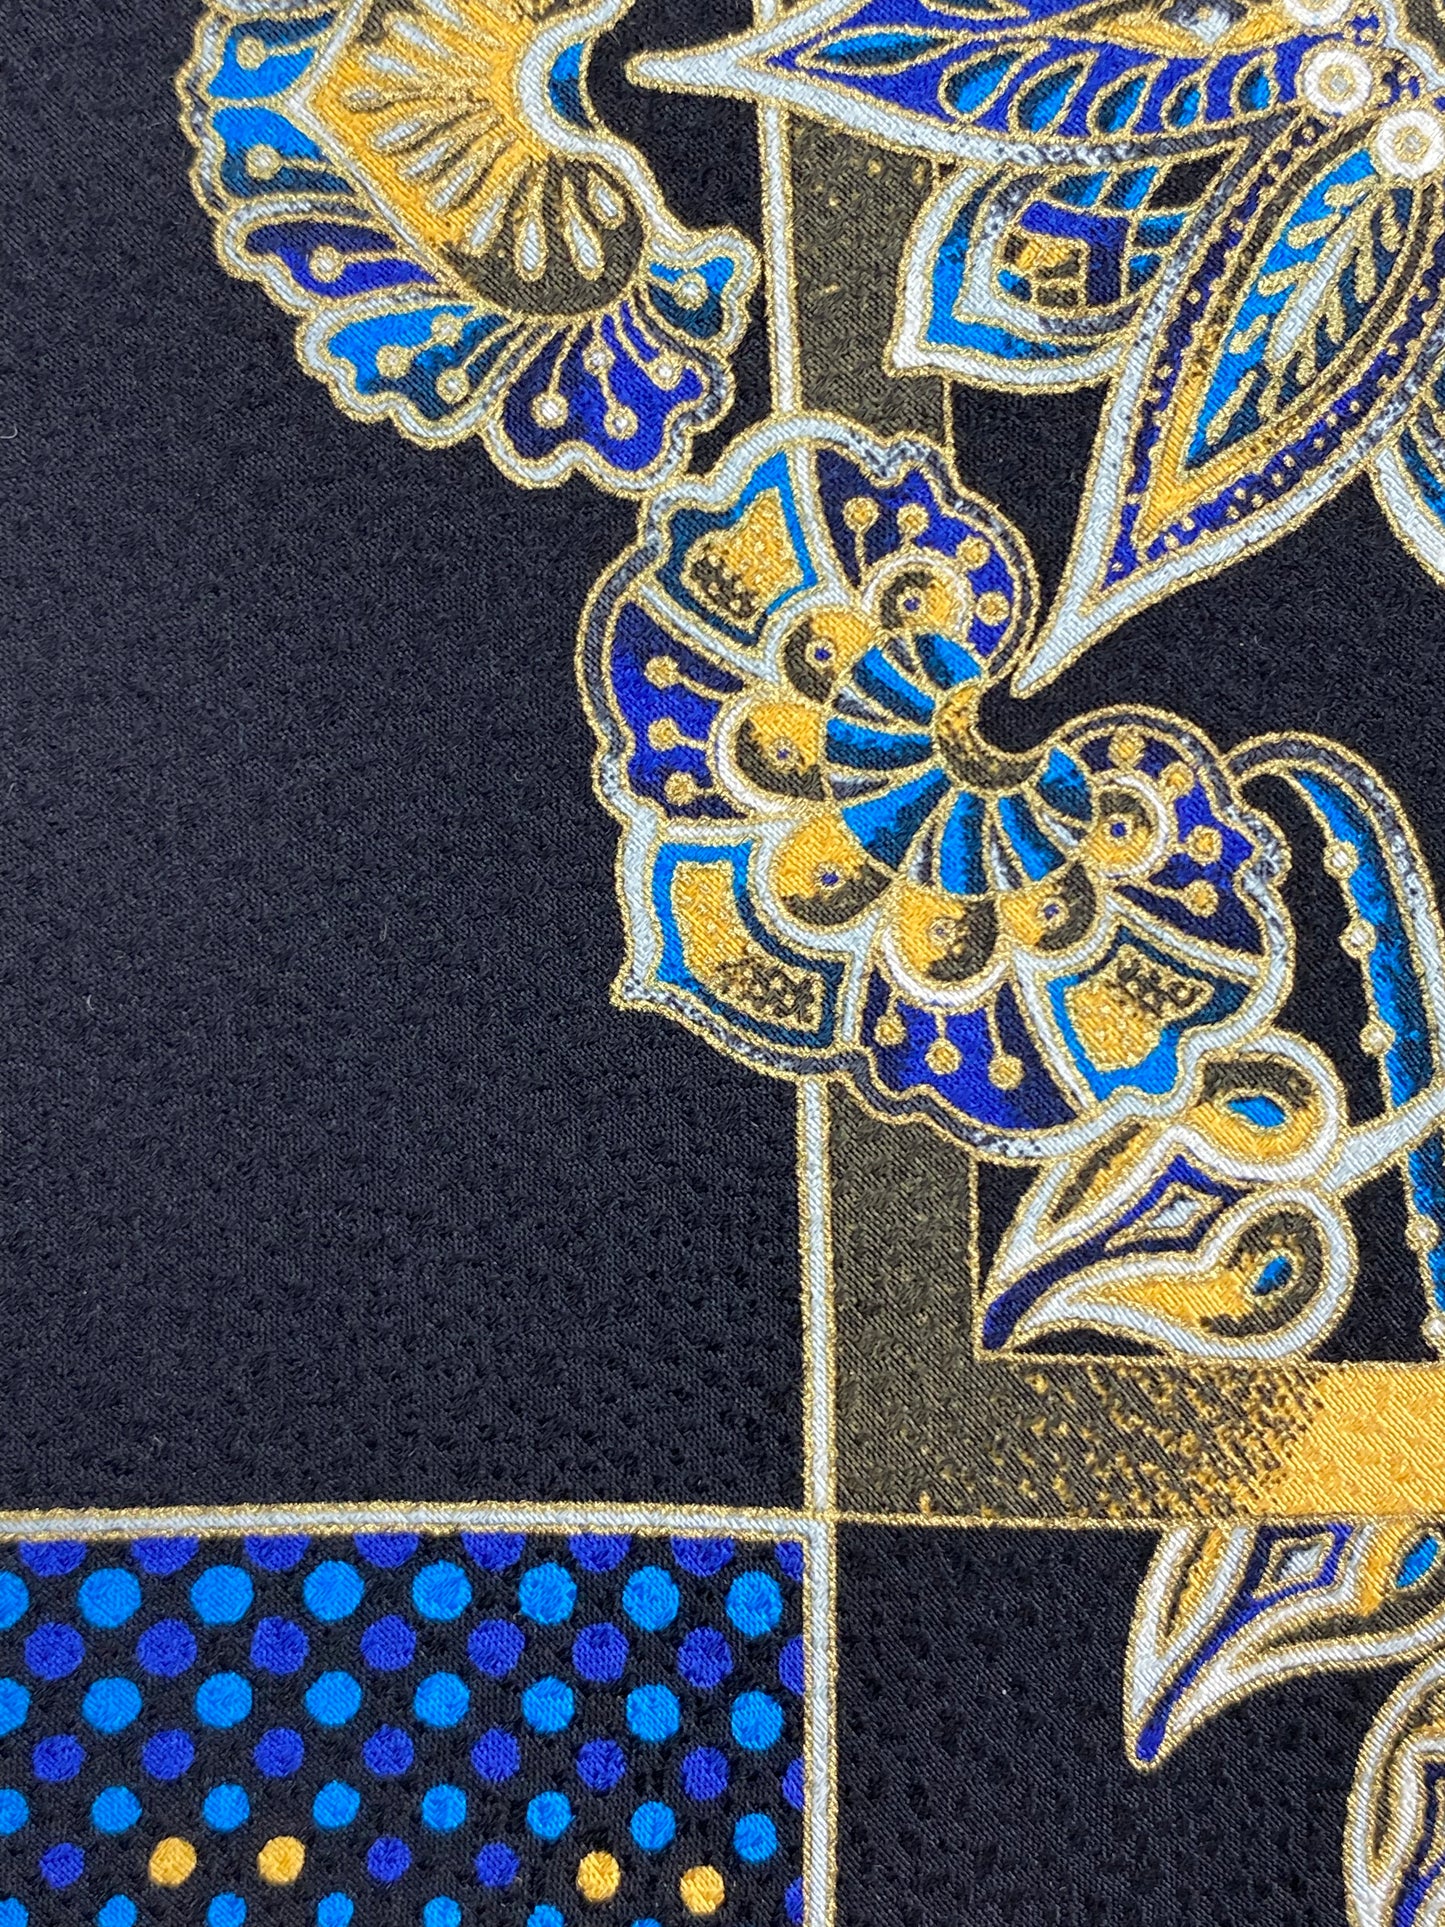 Close-up of: 90s Deadstock Silk Necktie, Men's Vintage Black/ Blue Indian Pattern Tie, NOS